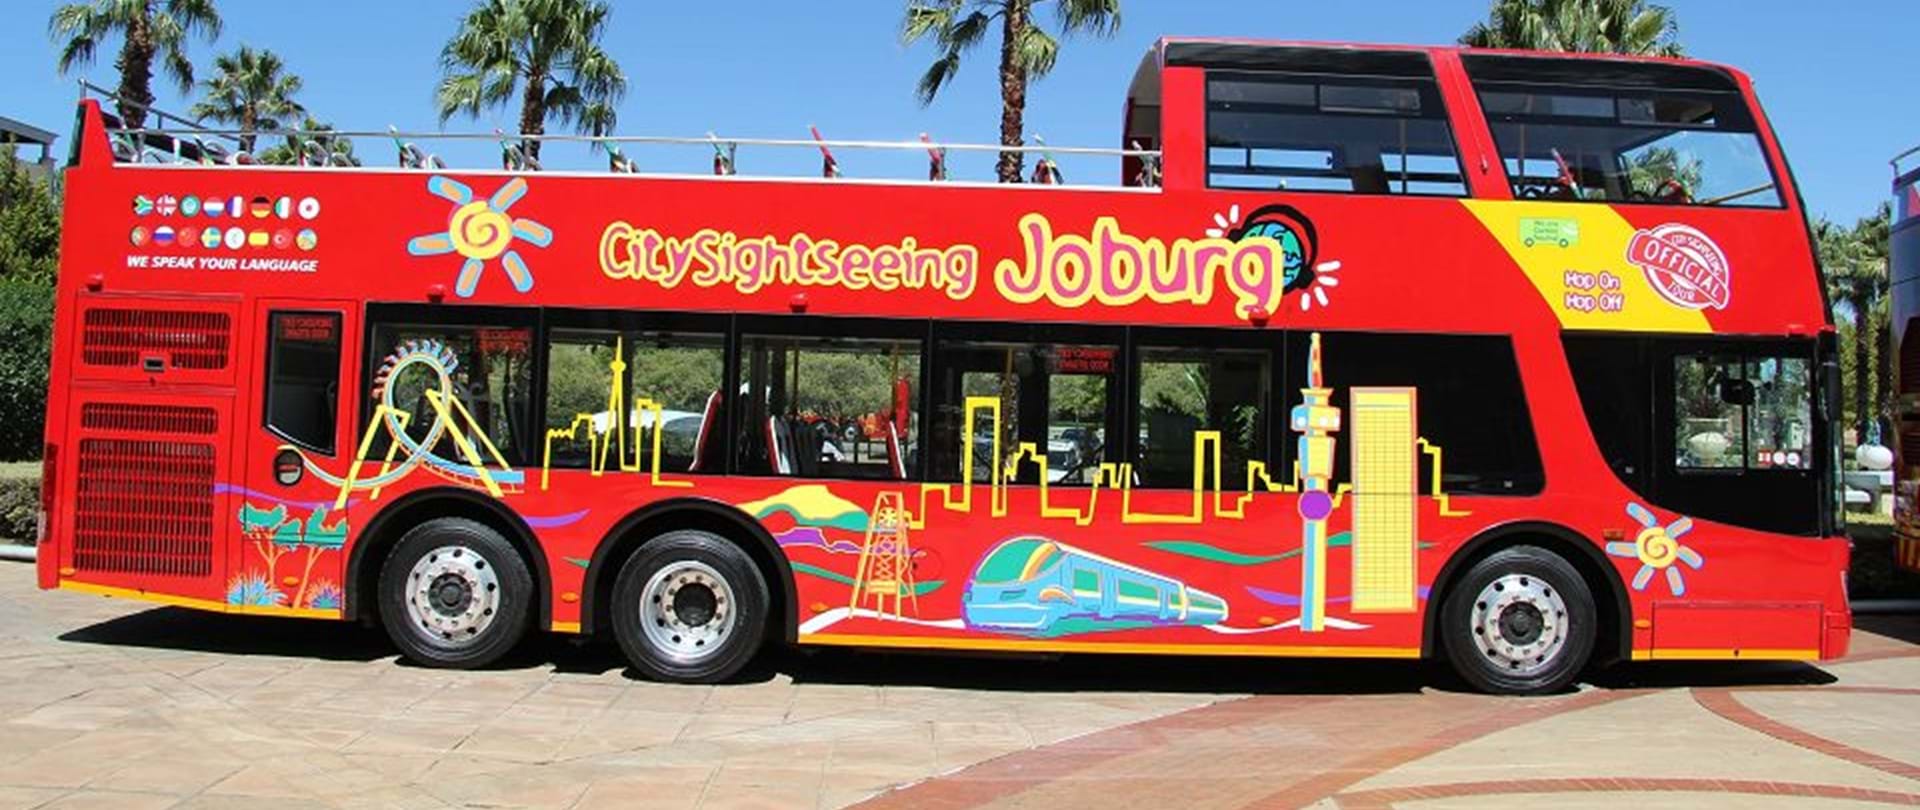 big bus tour johannesburg